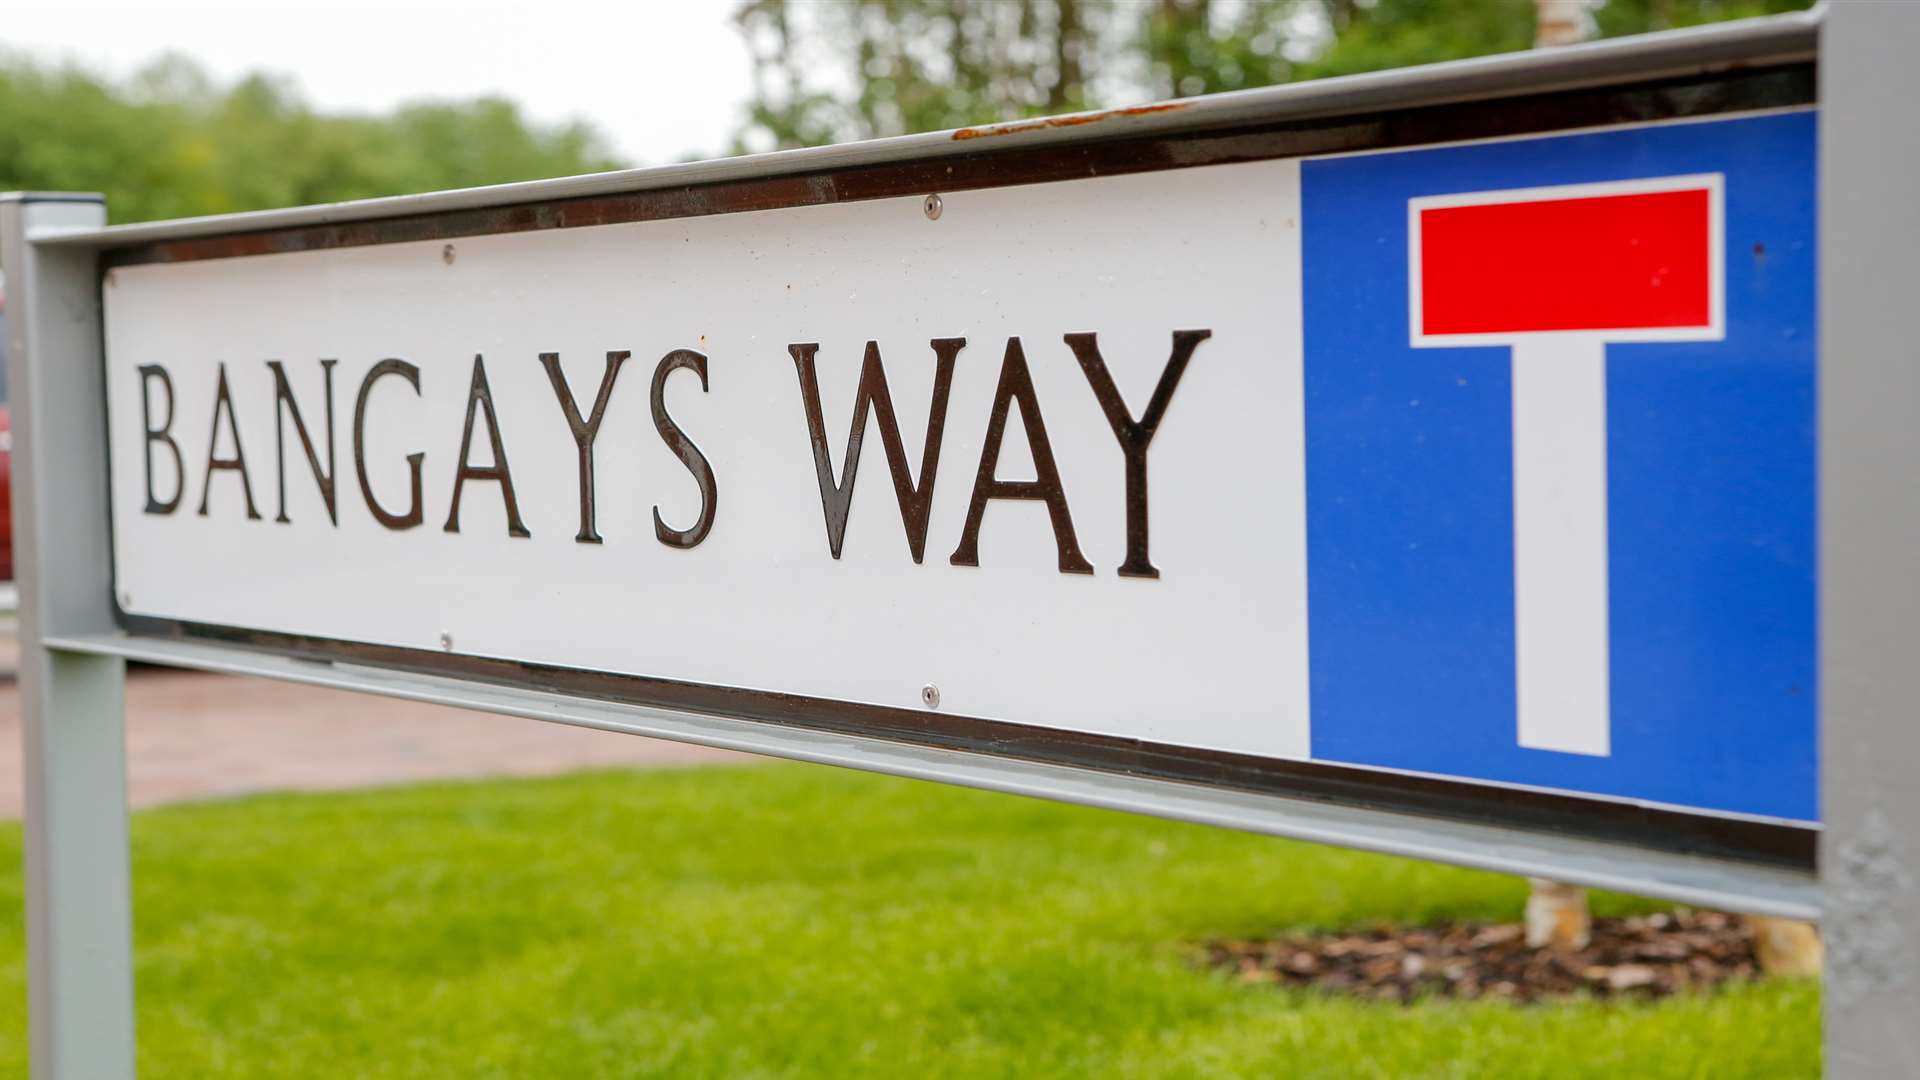 The Bangays Way street sign. Picture: Matthew Walker